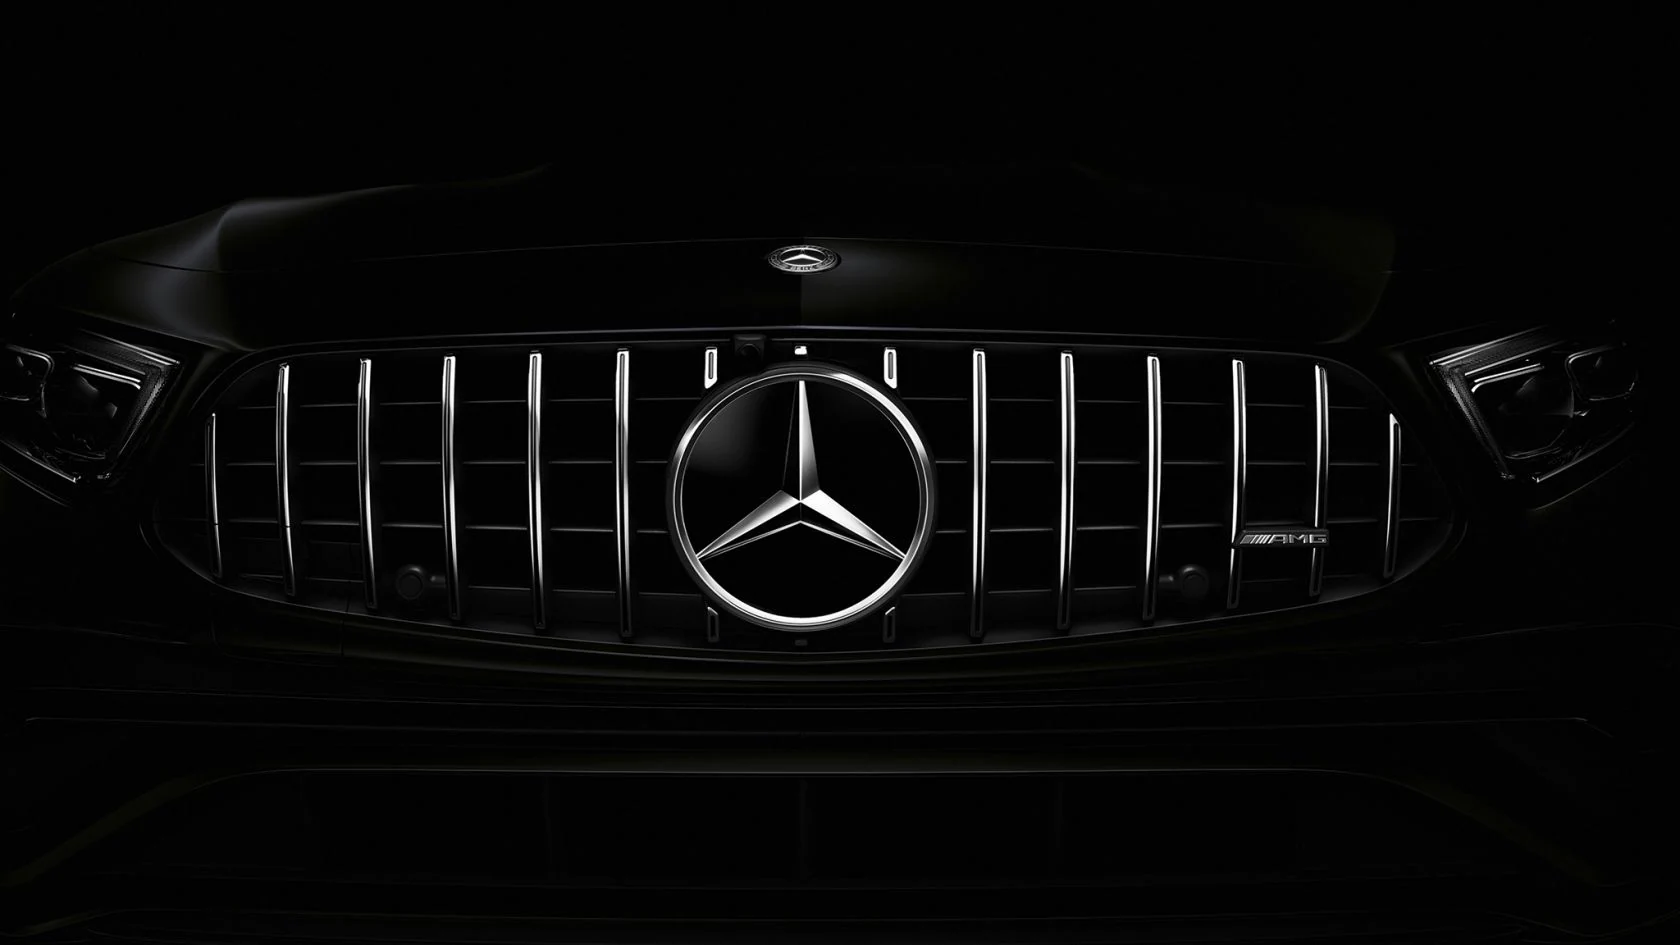 Mercedes-Benz Türk fon kurdu